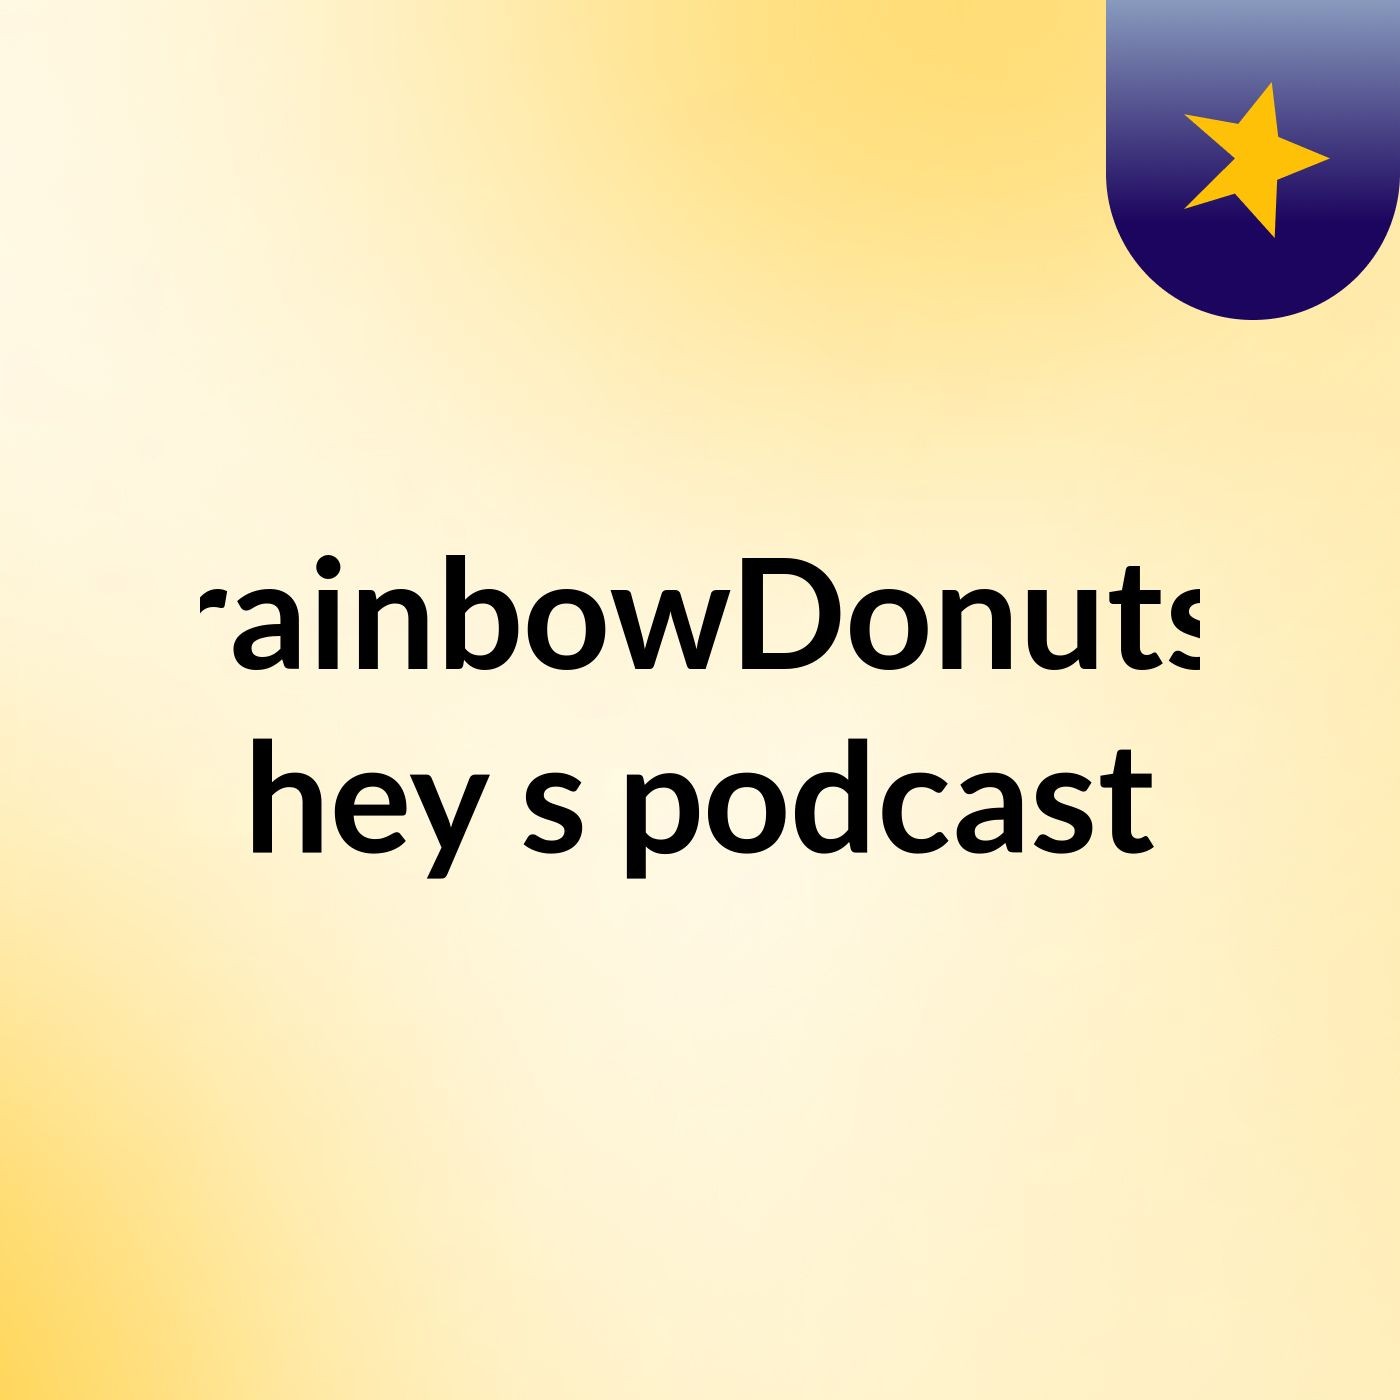 Episode 6 - rainbowDonuts hey's podcast